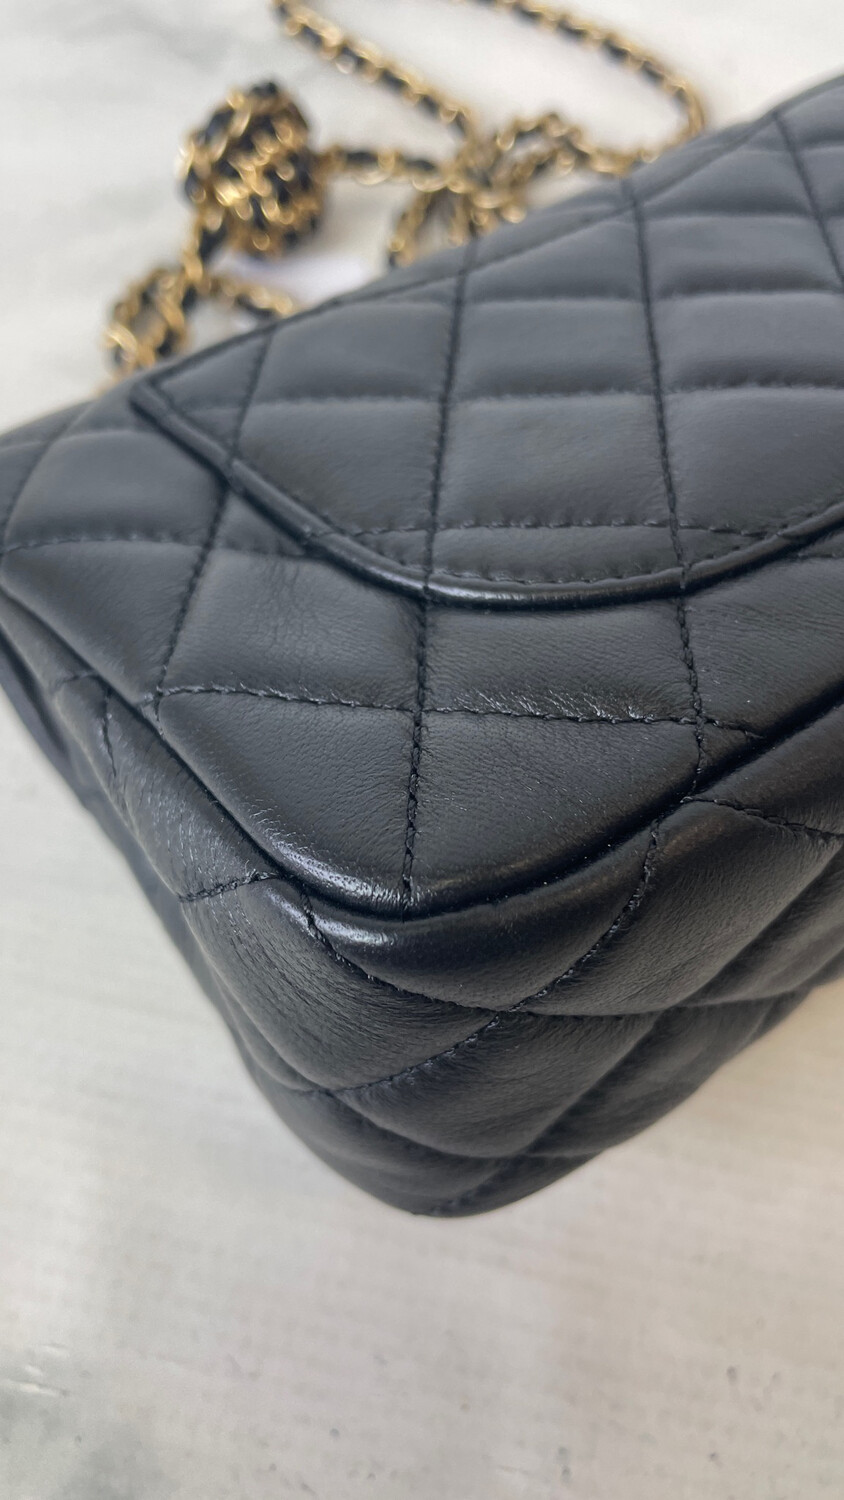 Chanel Coco Crush Mini Rectangular, Black Lambskin with Gold Hardware, New  in Box WA001